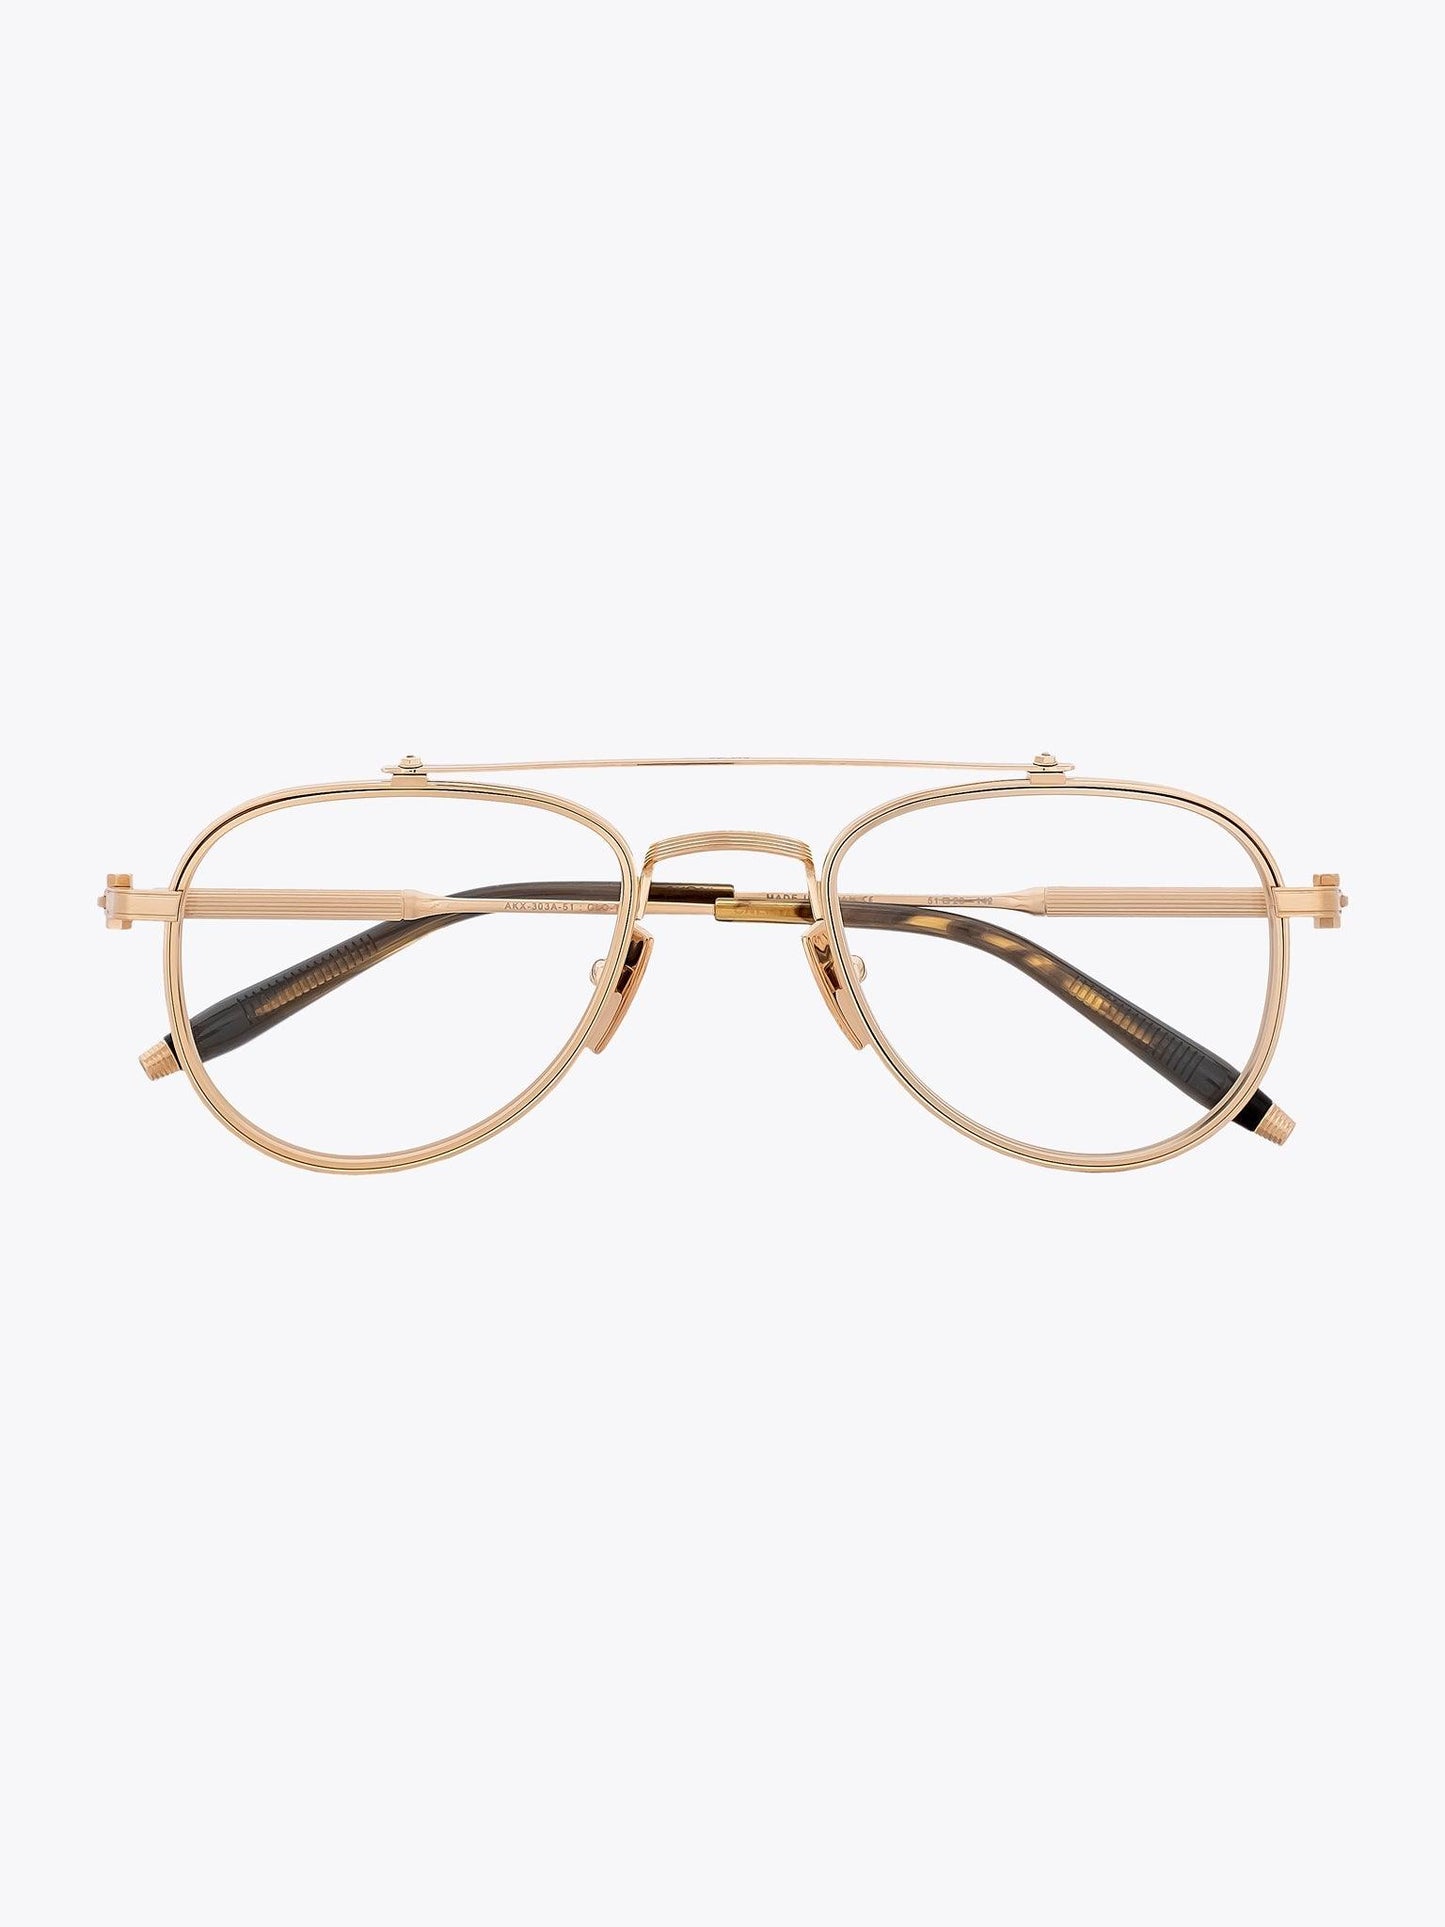 AKONI Calisto Gold Eyeglasses - Apodep.com